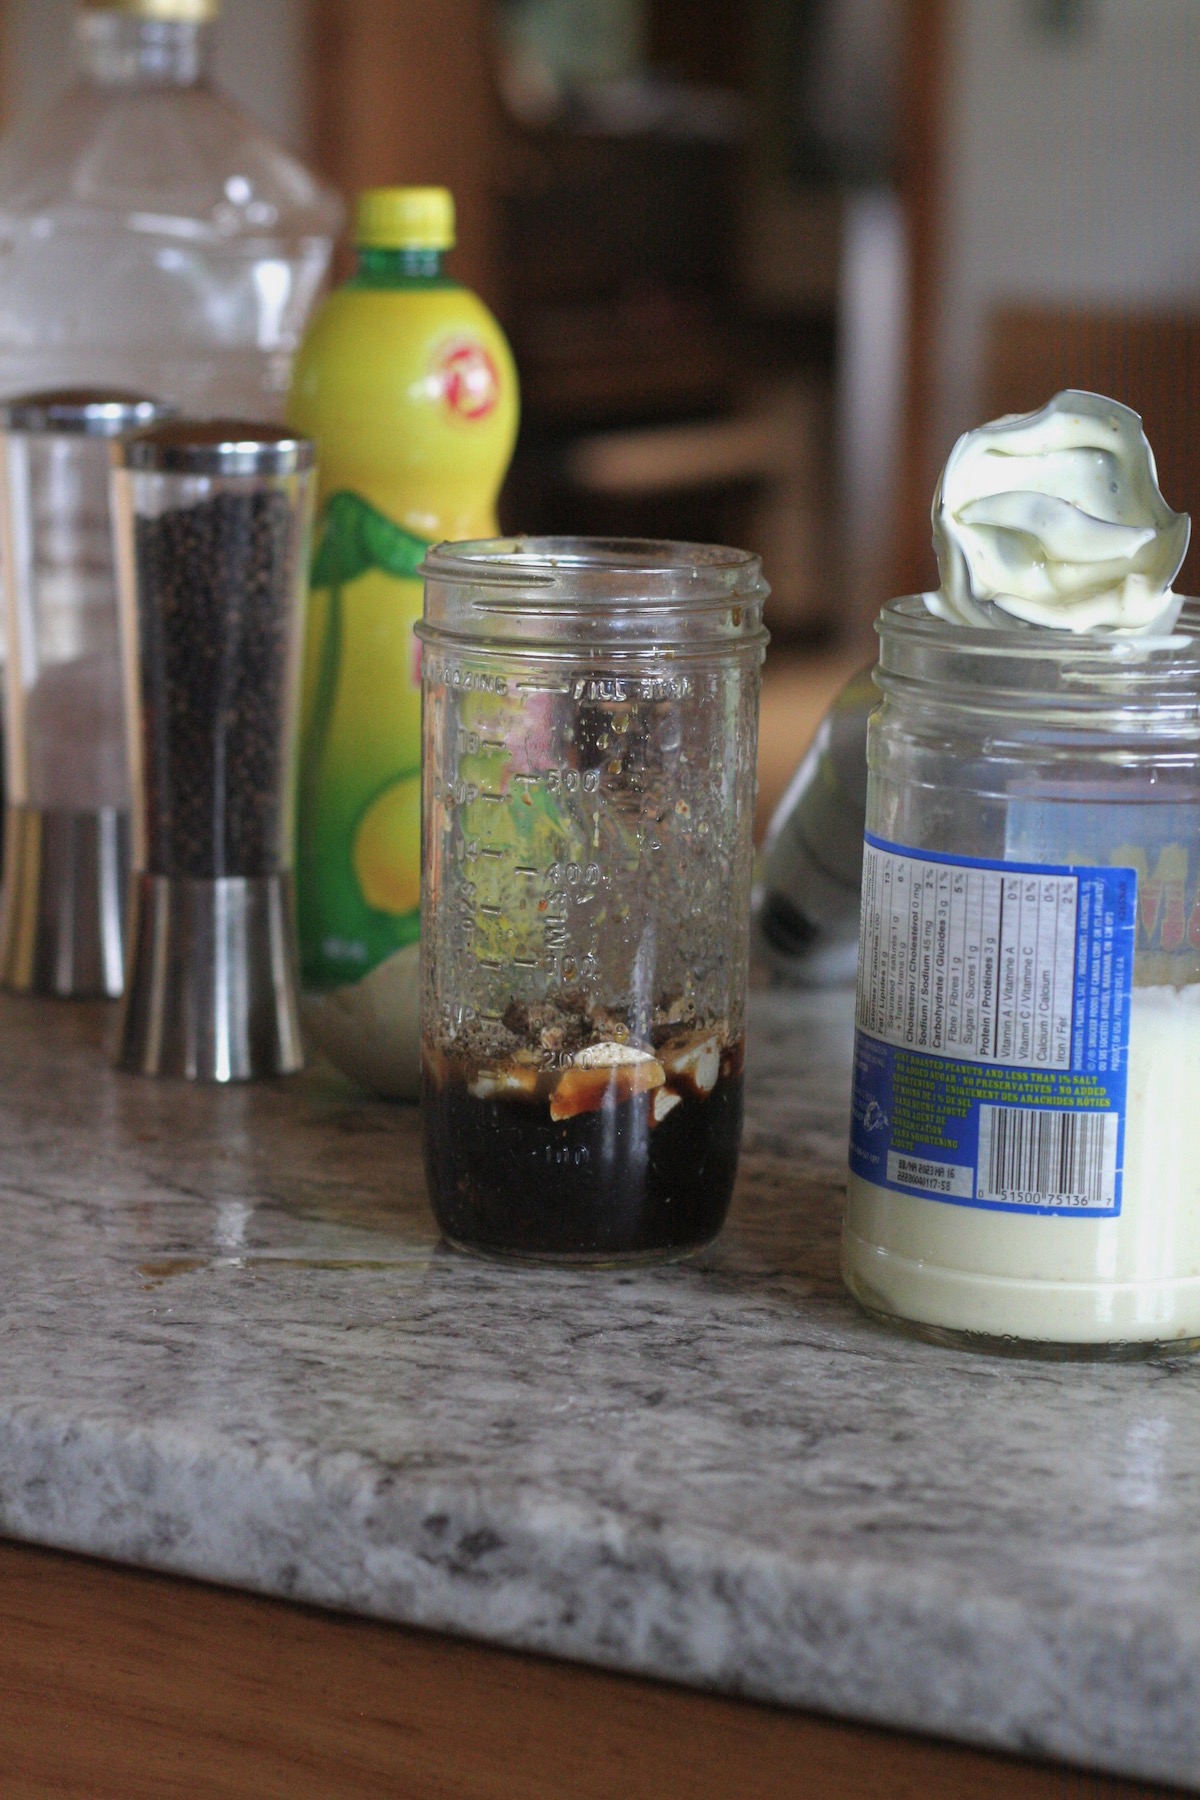 Garlic infused oil in a jar next to a jar of Caesar dressing.